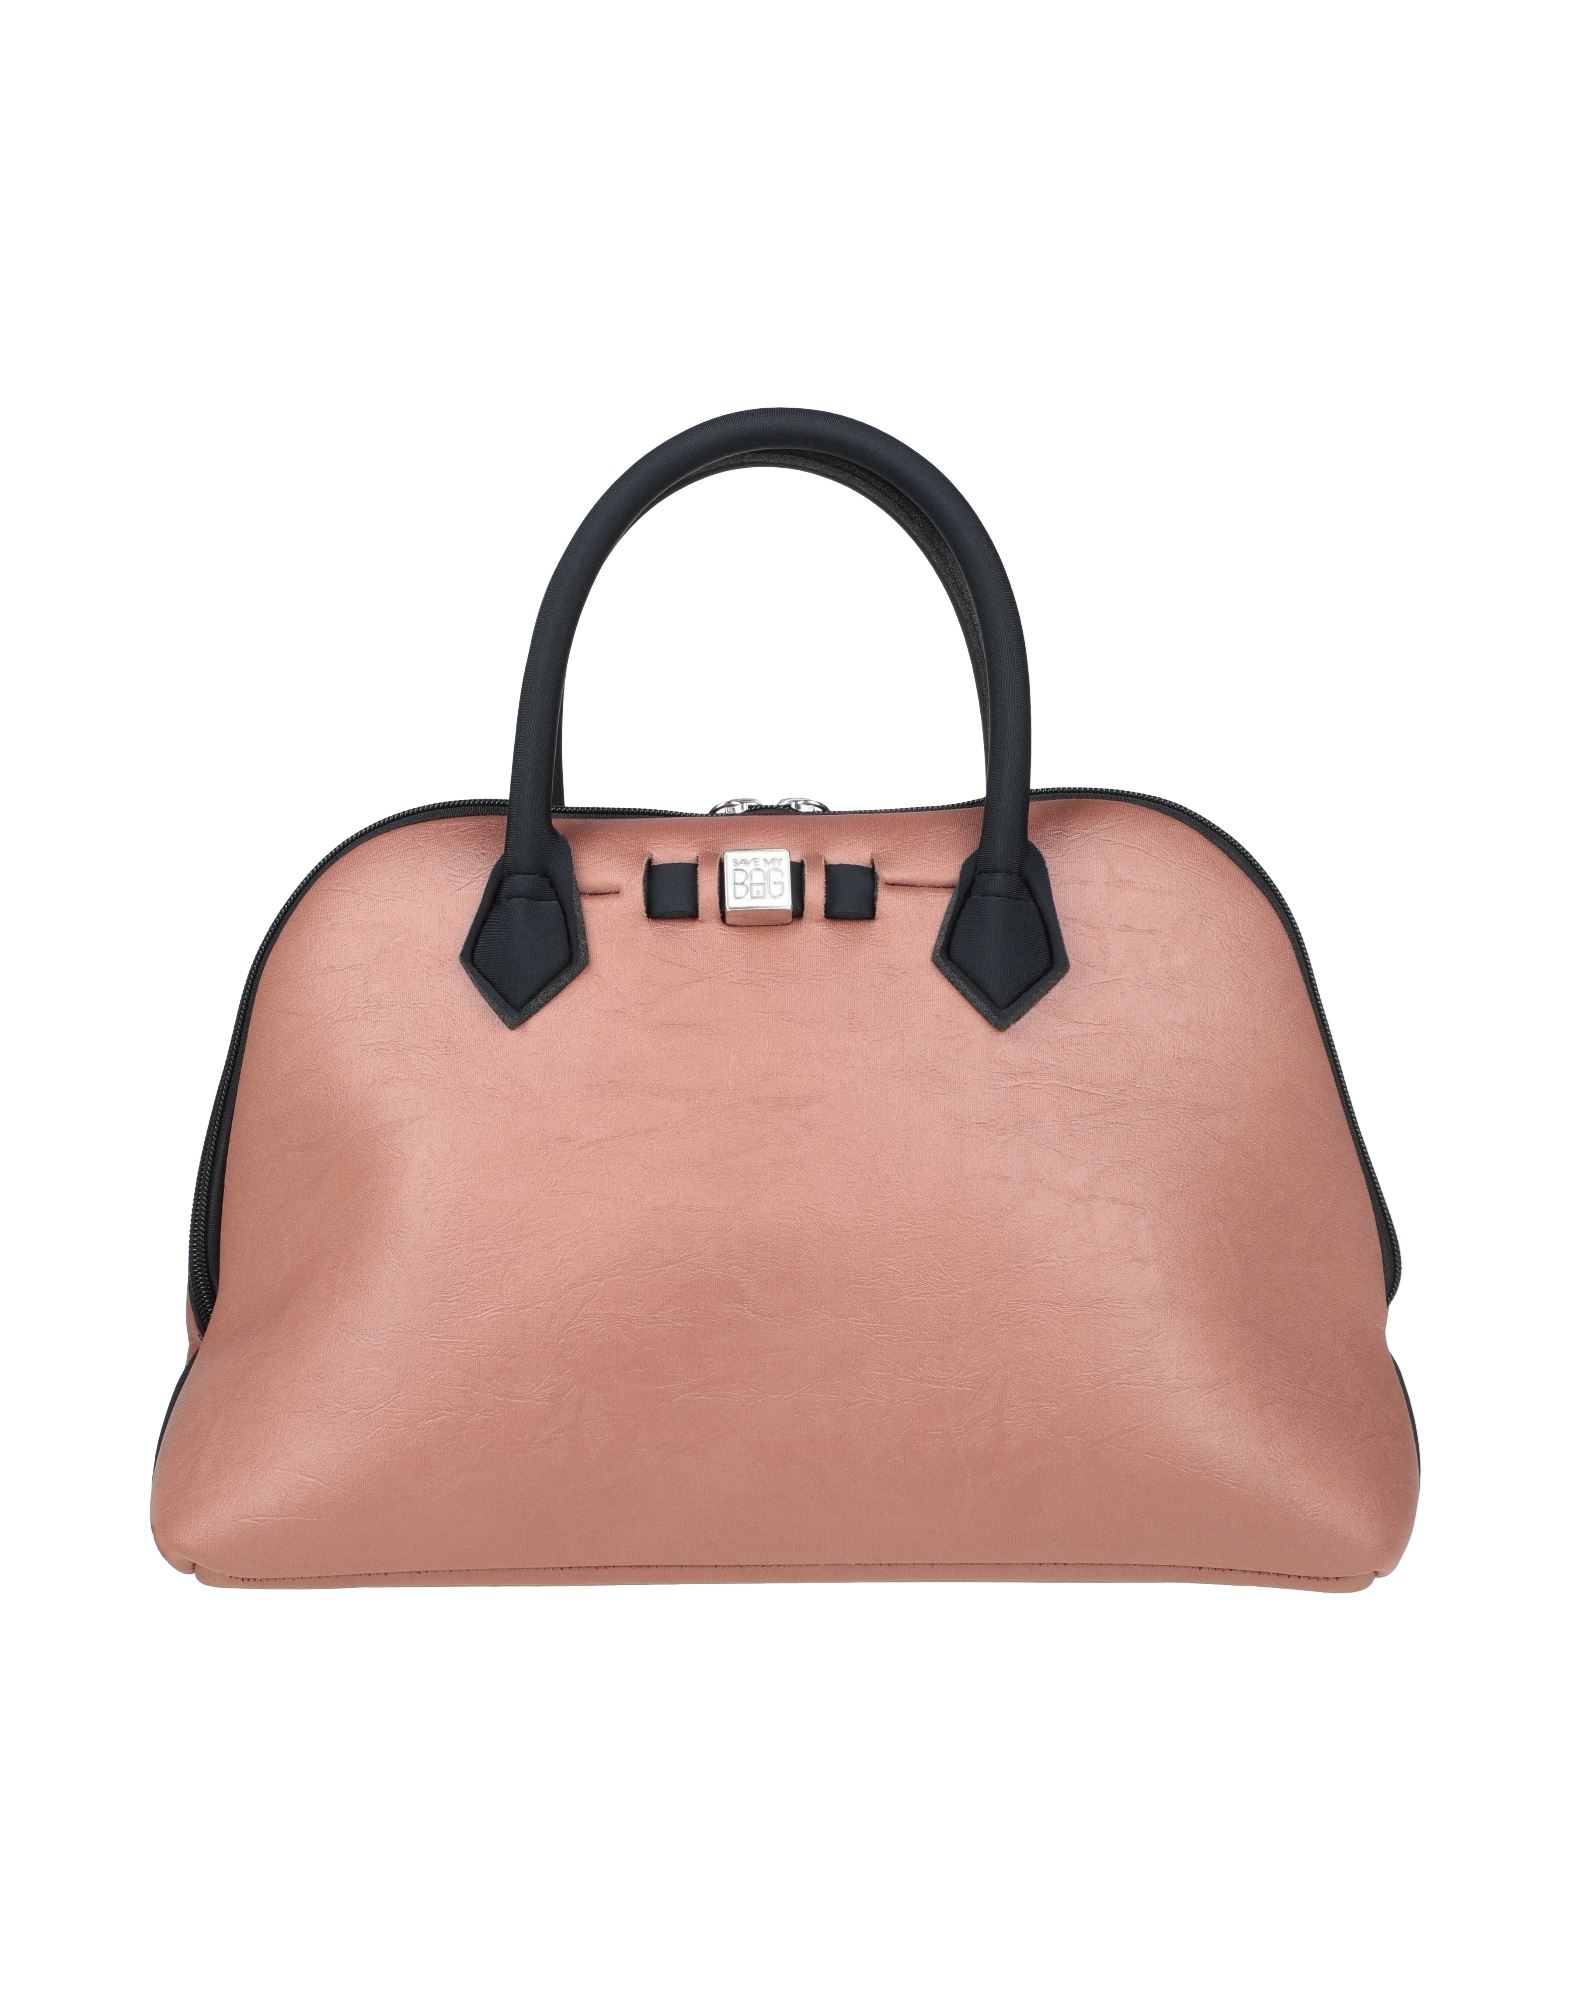 Save My Bag Handbags In Light Brown